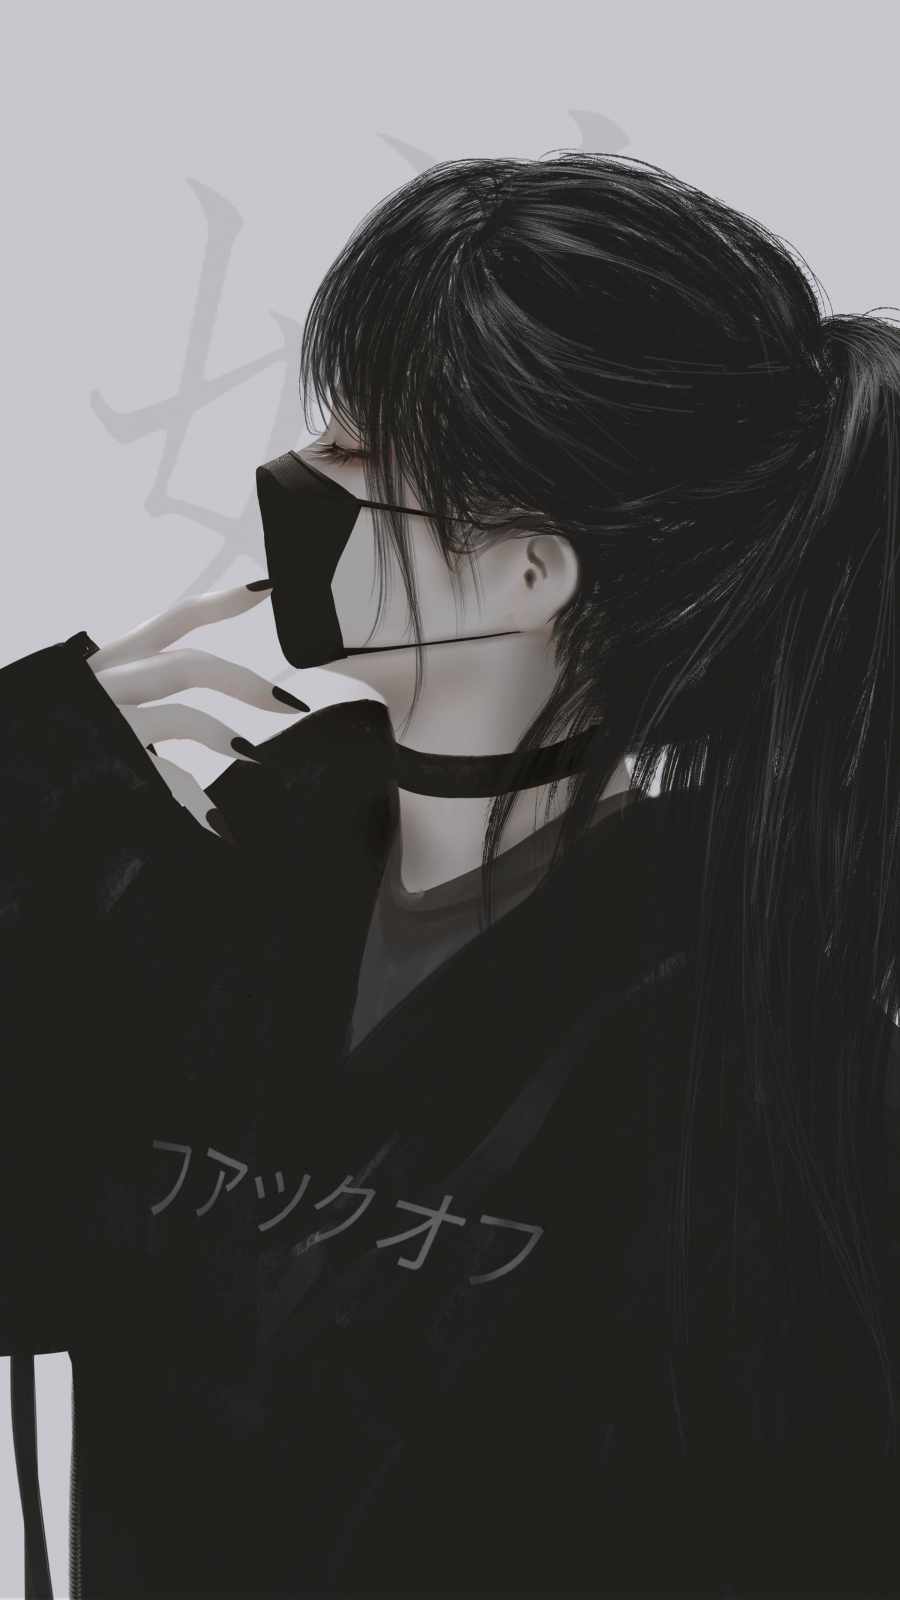 Black Mask Girl iPhone 13 Wallpaper